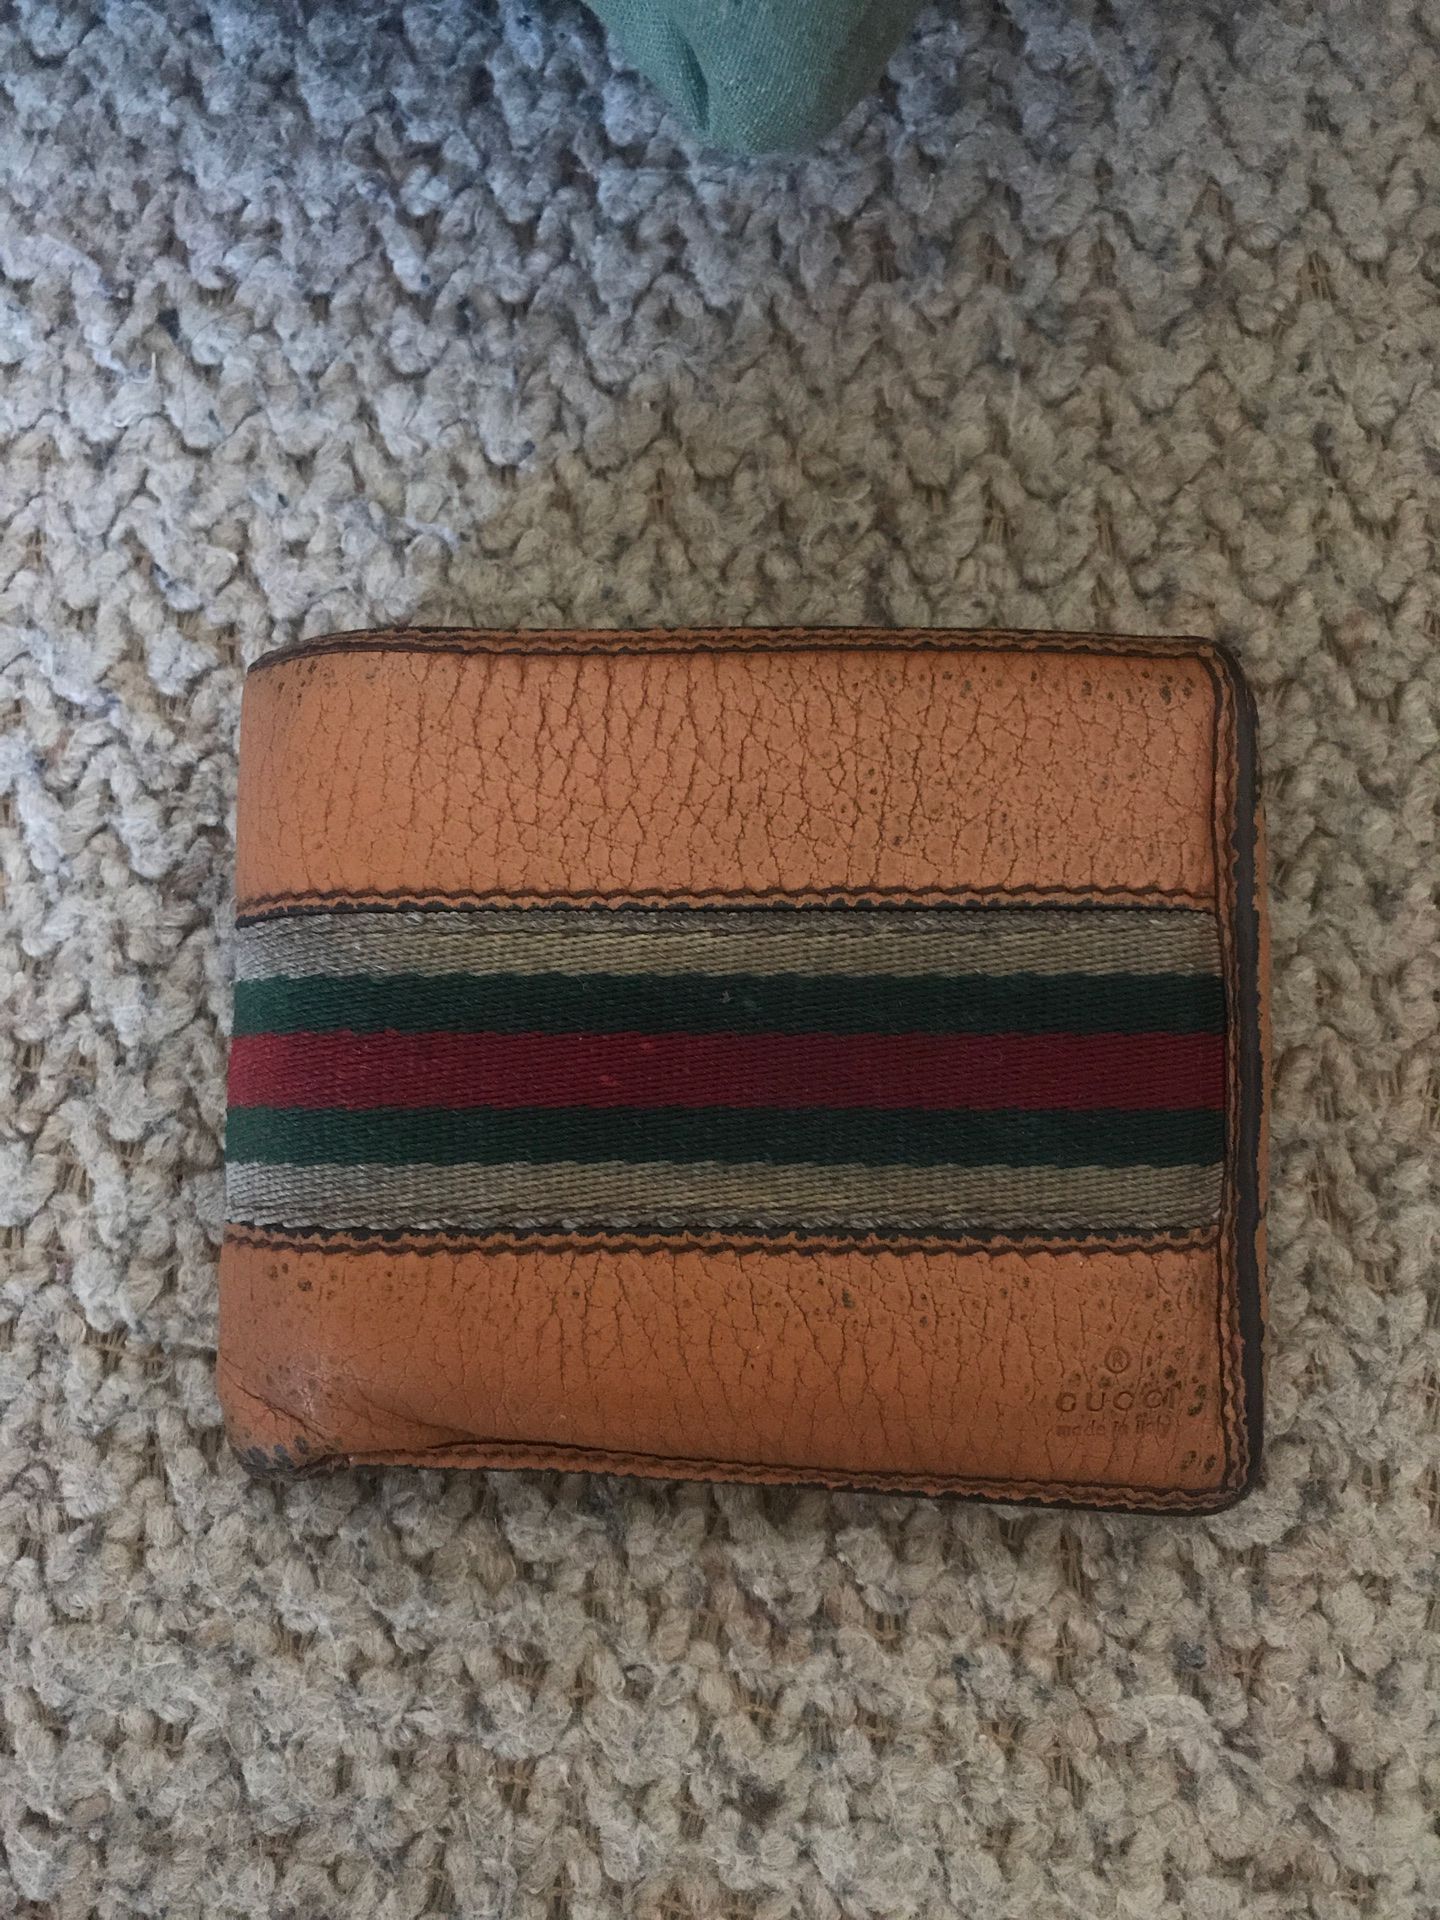 Gucci men’s wallet